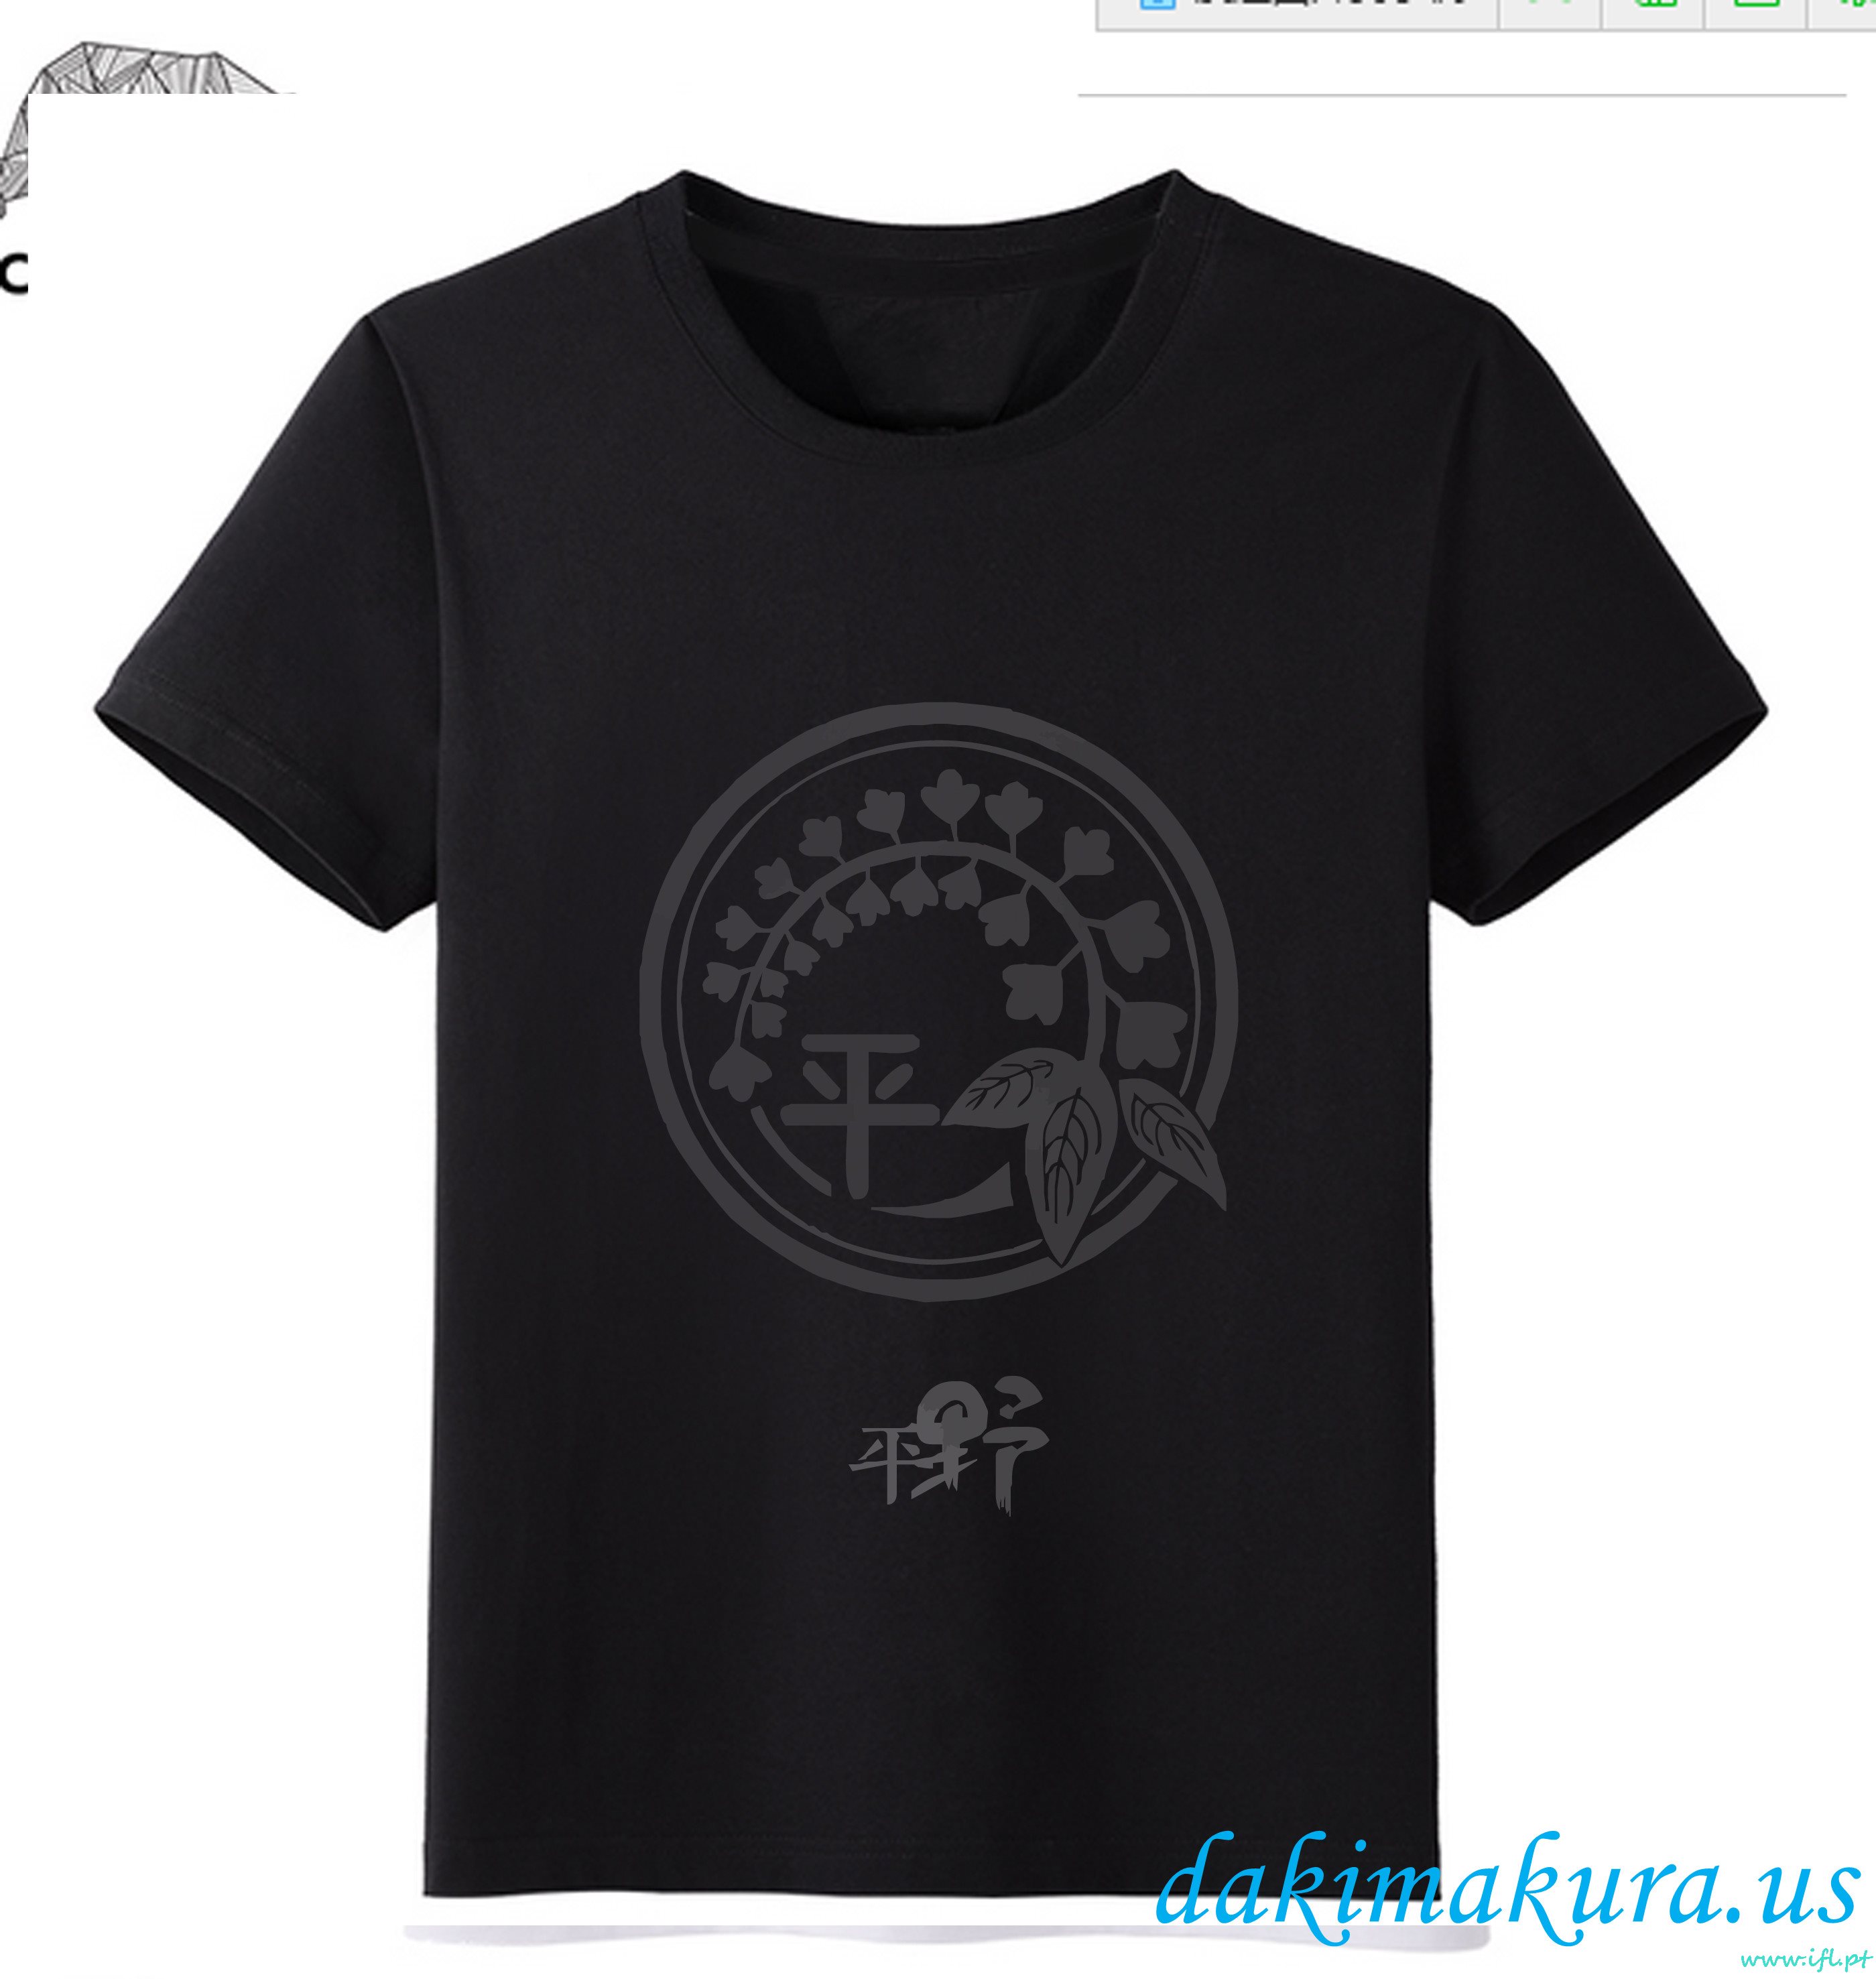 Goedkope Zwarte - Touken Ranbu Online Mannen Anime Maniert-shirts Van De Fabriek Van China